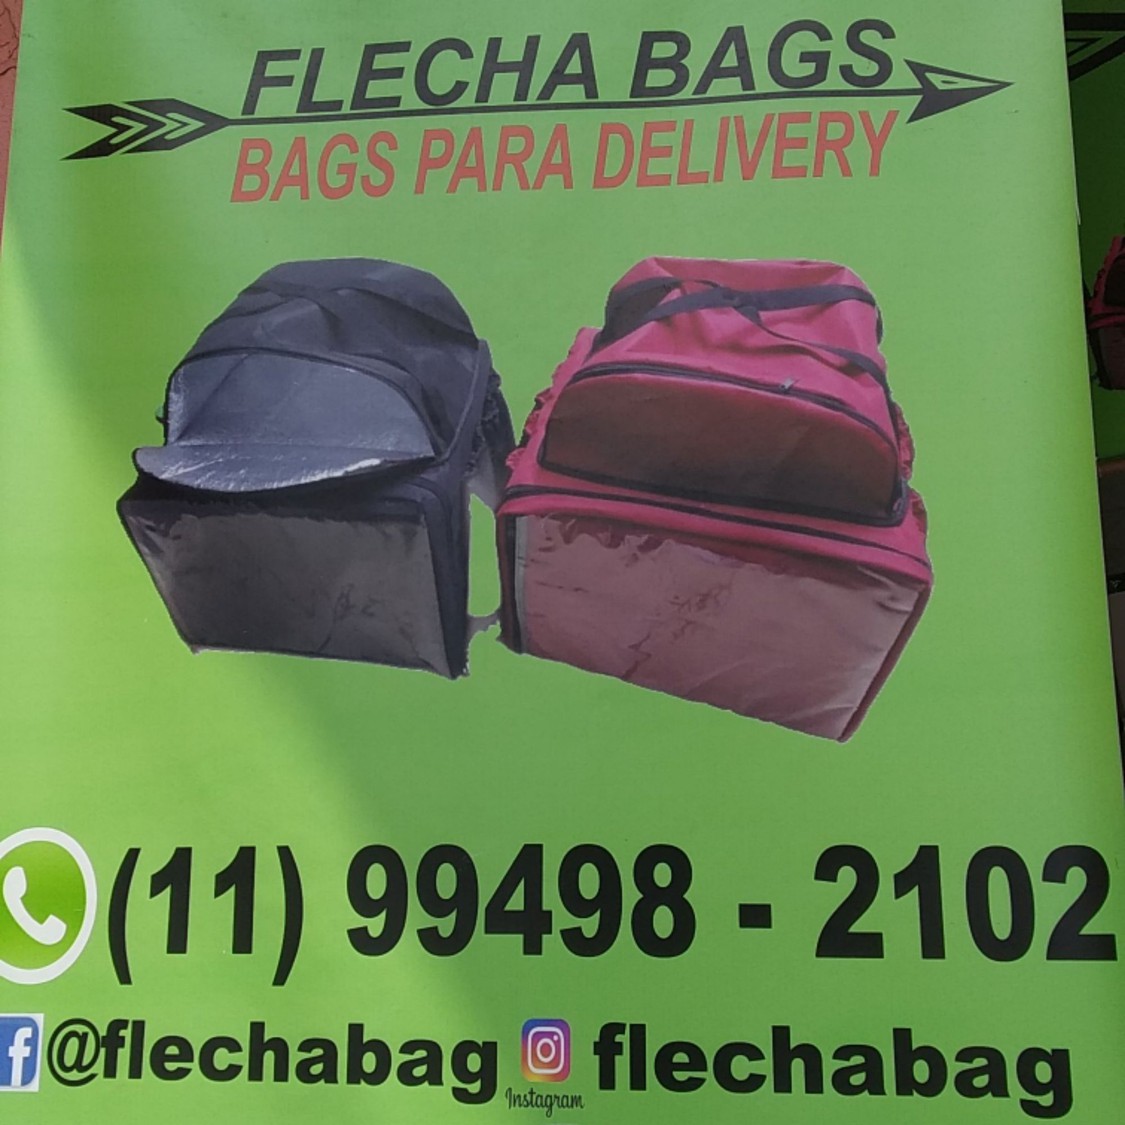 FLECHABAG BAGS PARA DELIVERY - CLIENTES